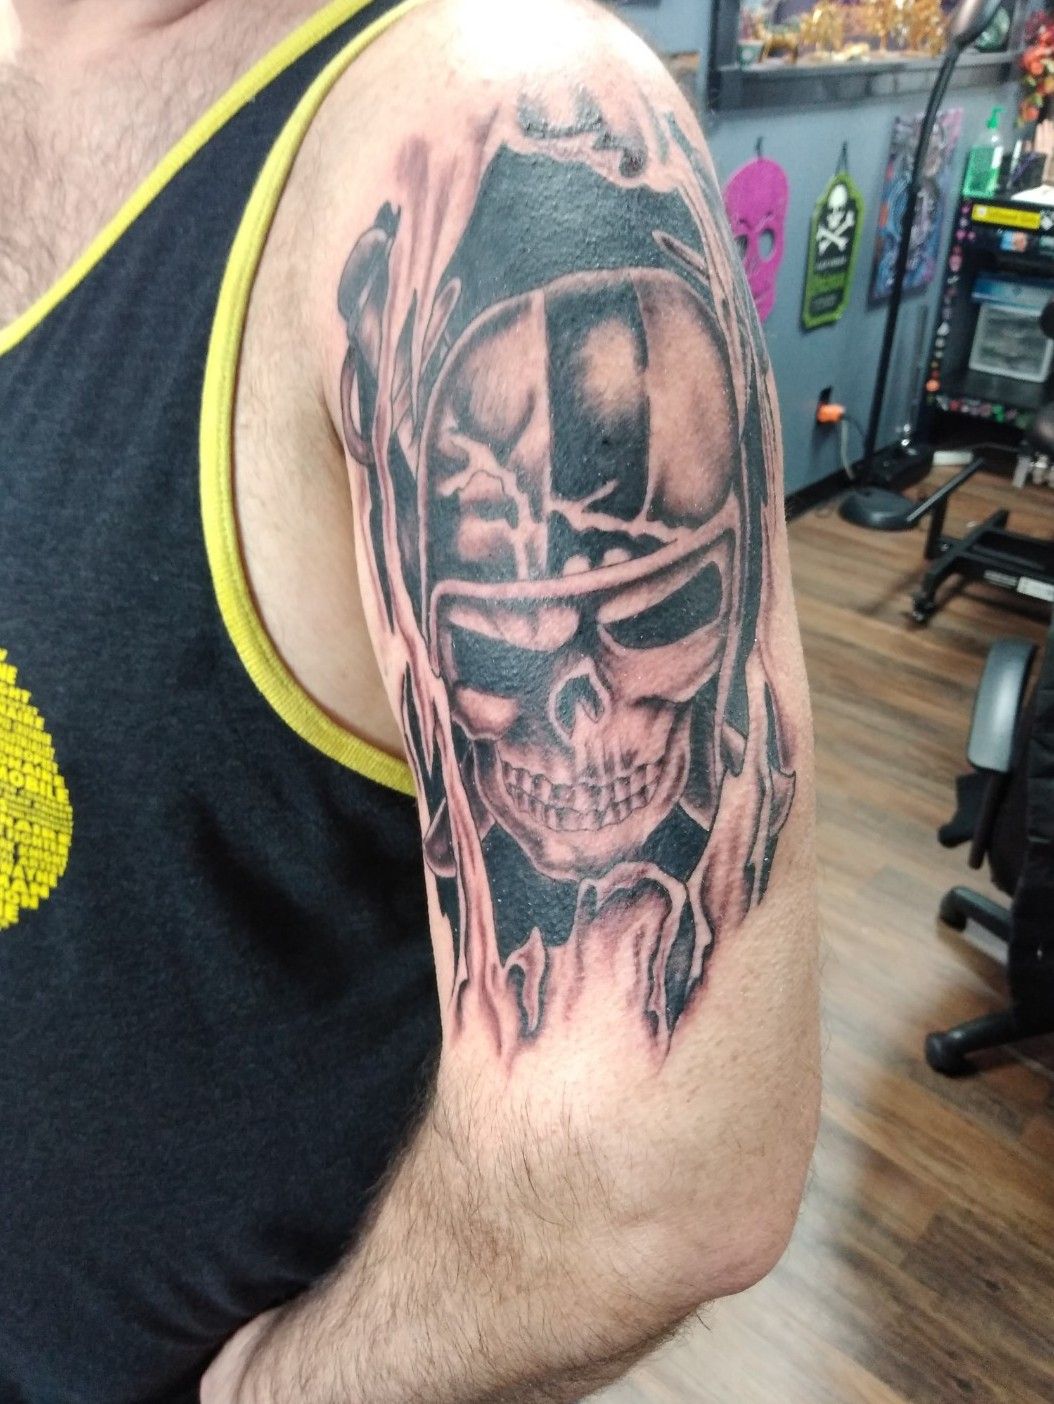 Smoking Skull Tattoo by HaleyGeorge on DeviantArt